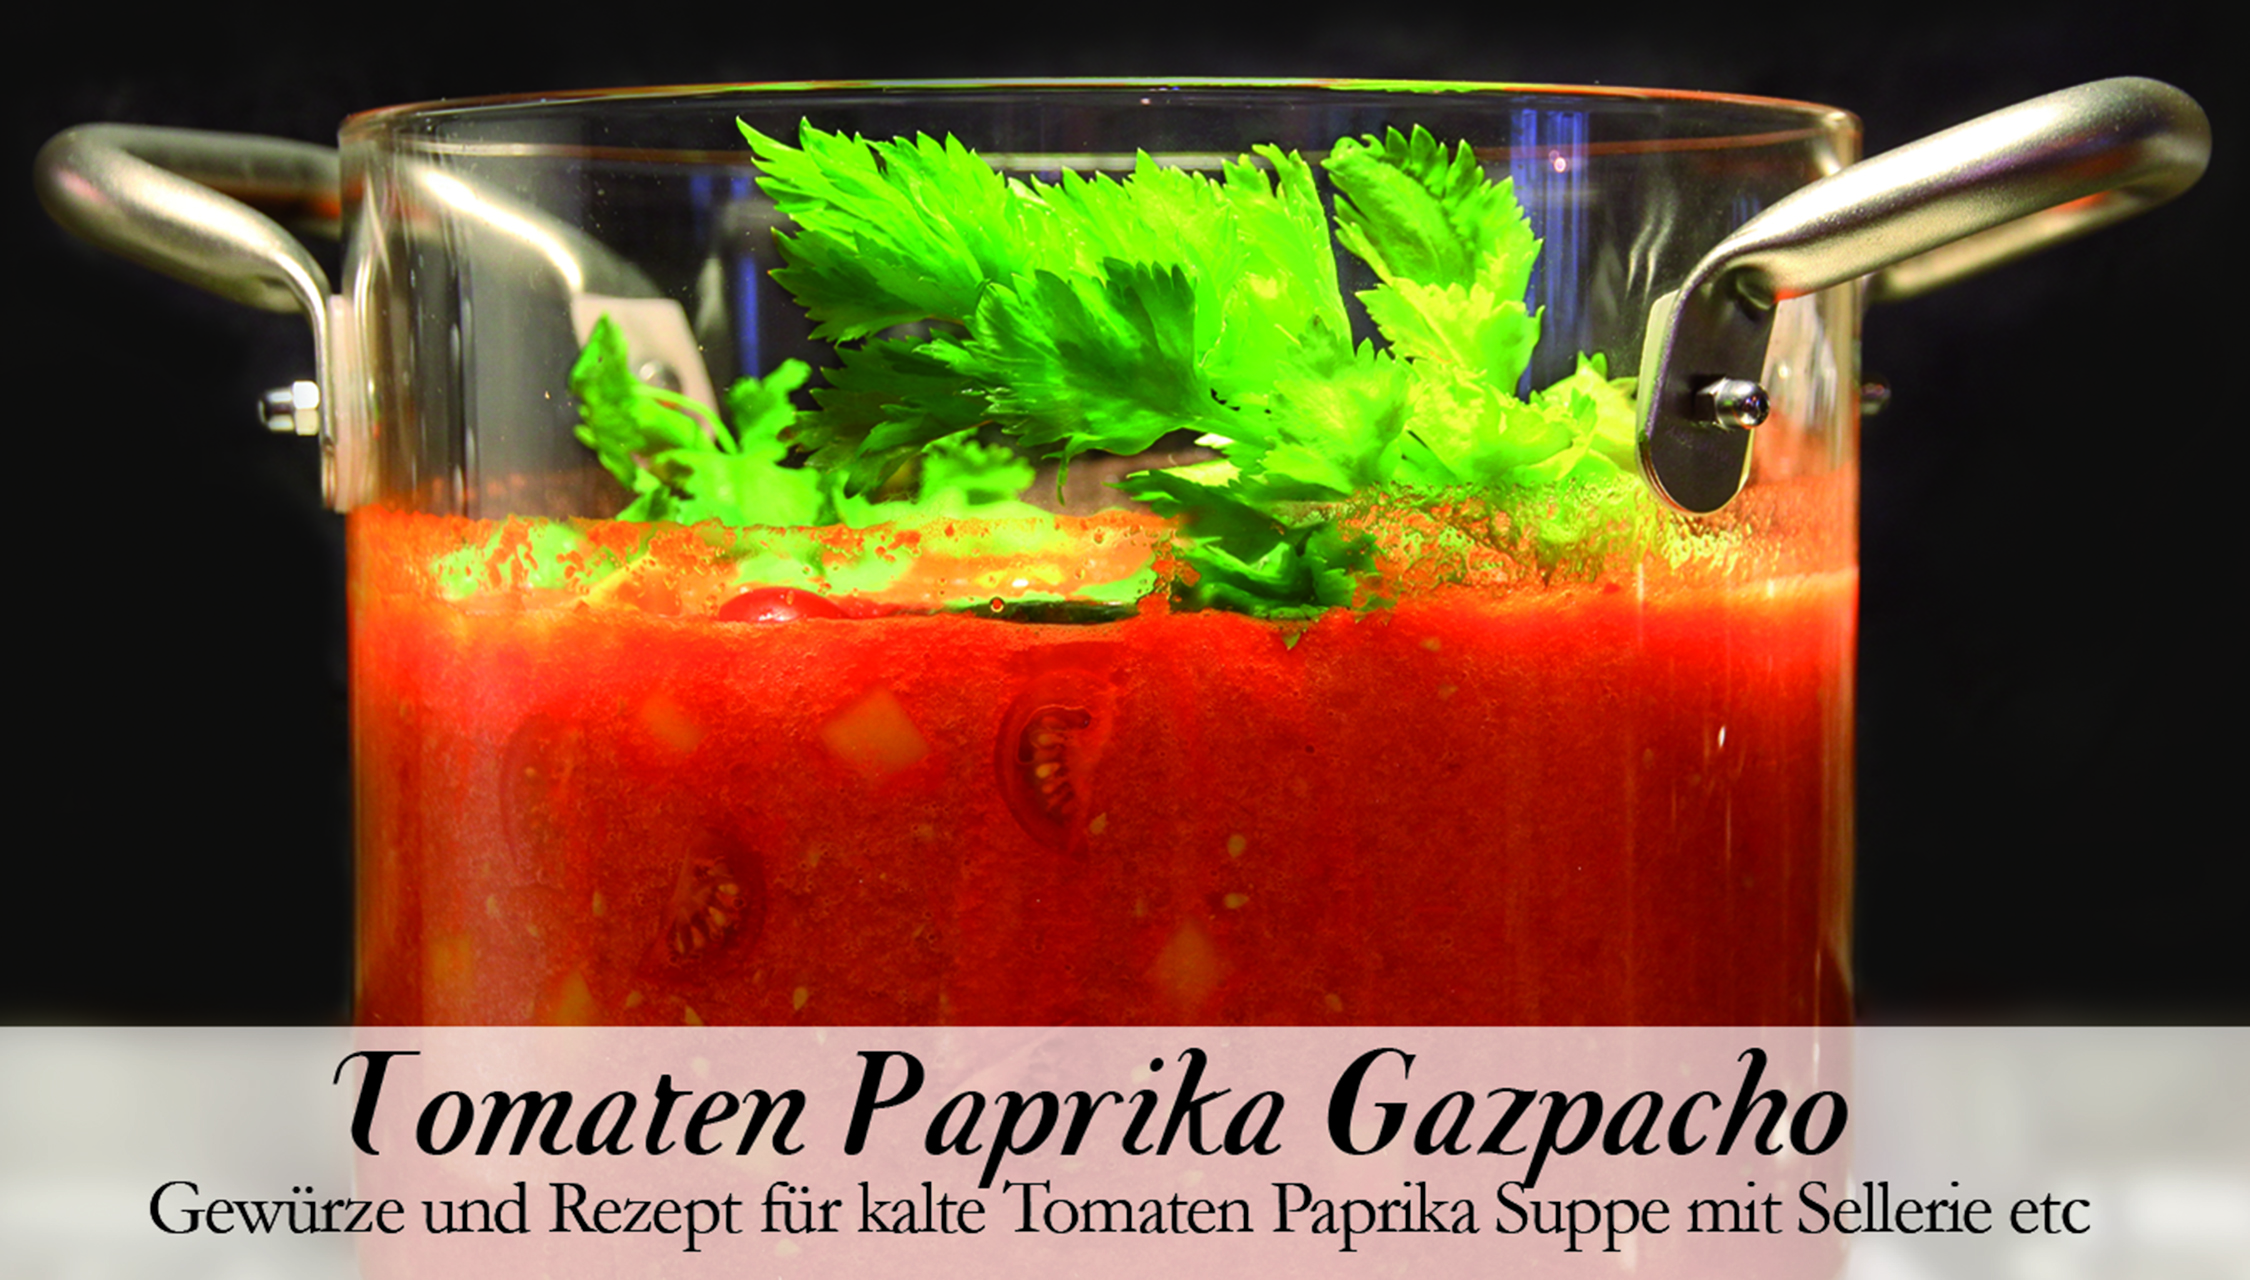 Tomaten Paprika Gazpacho-Gewürzkasten